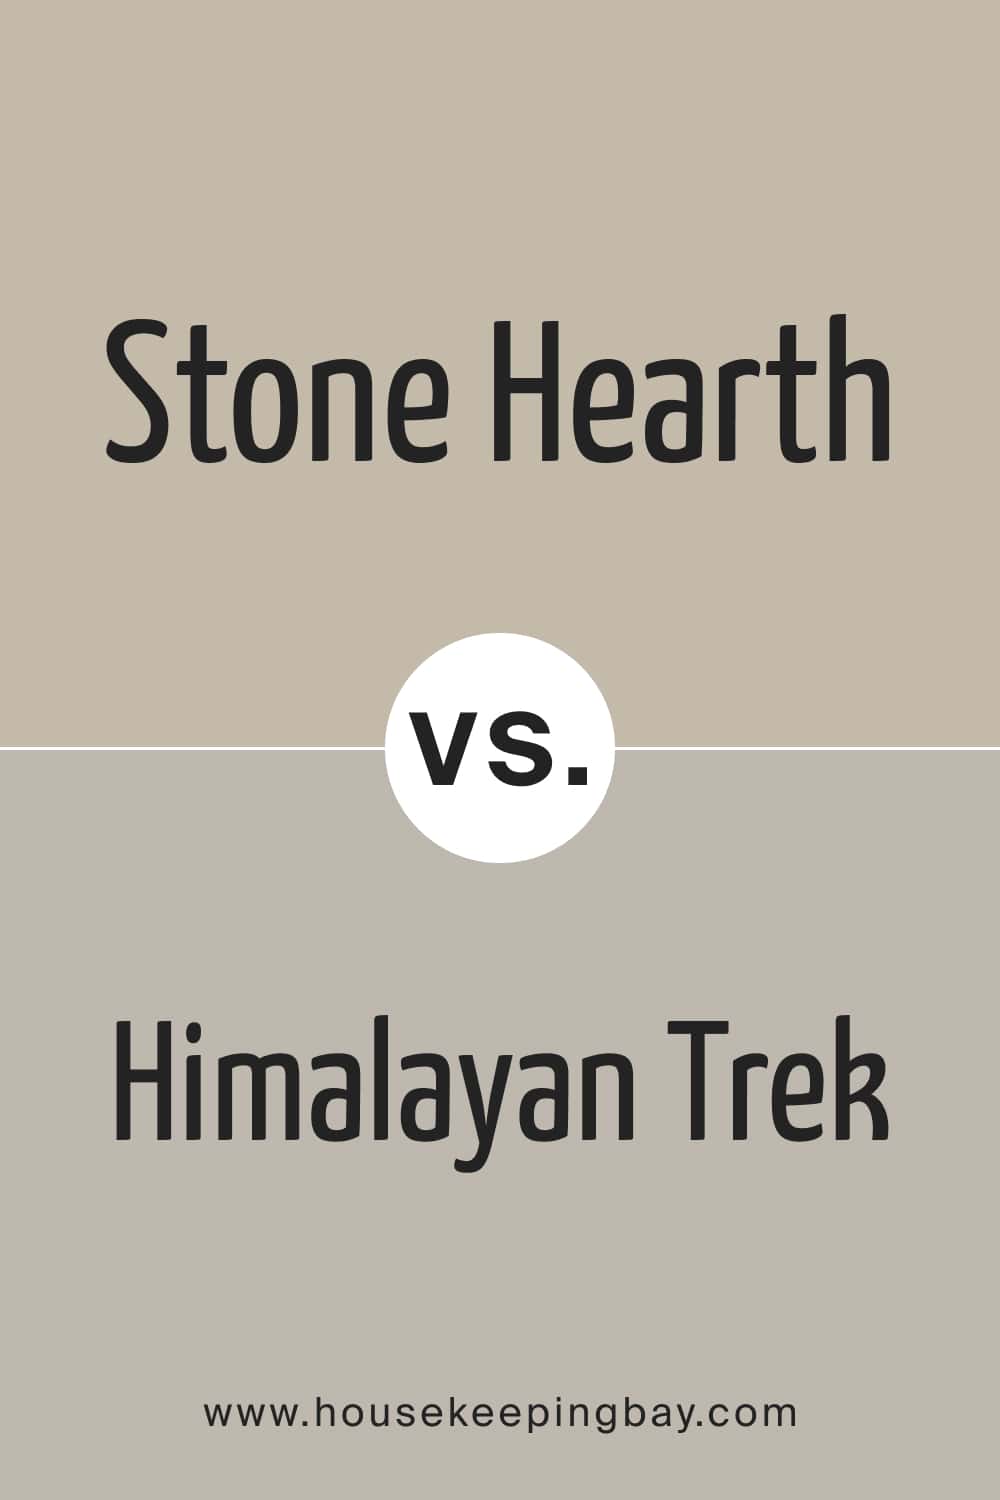 Stone Hearth vs Himalayan Trek